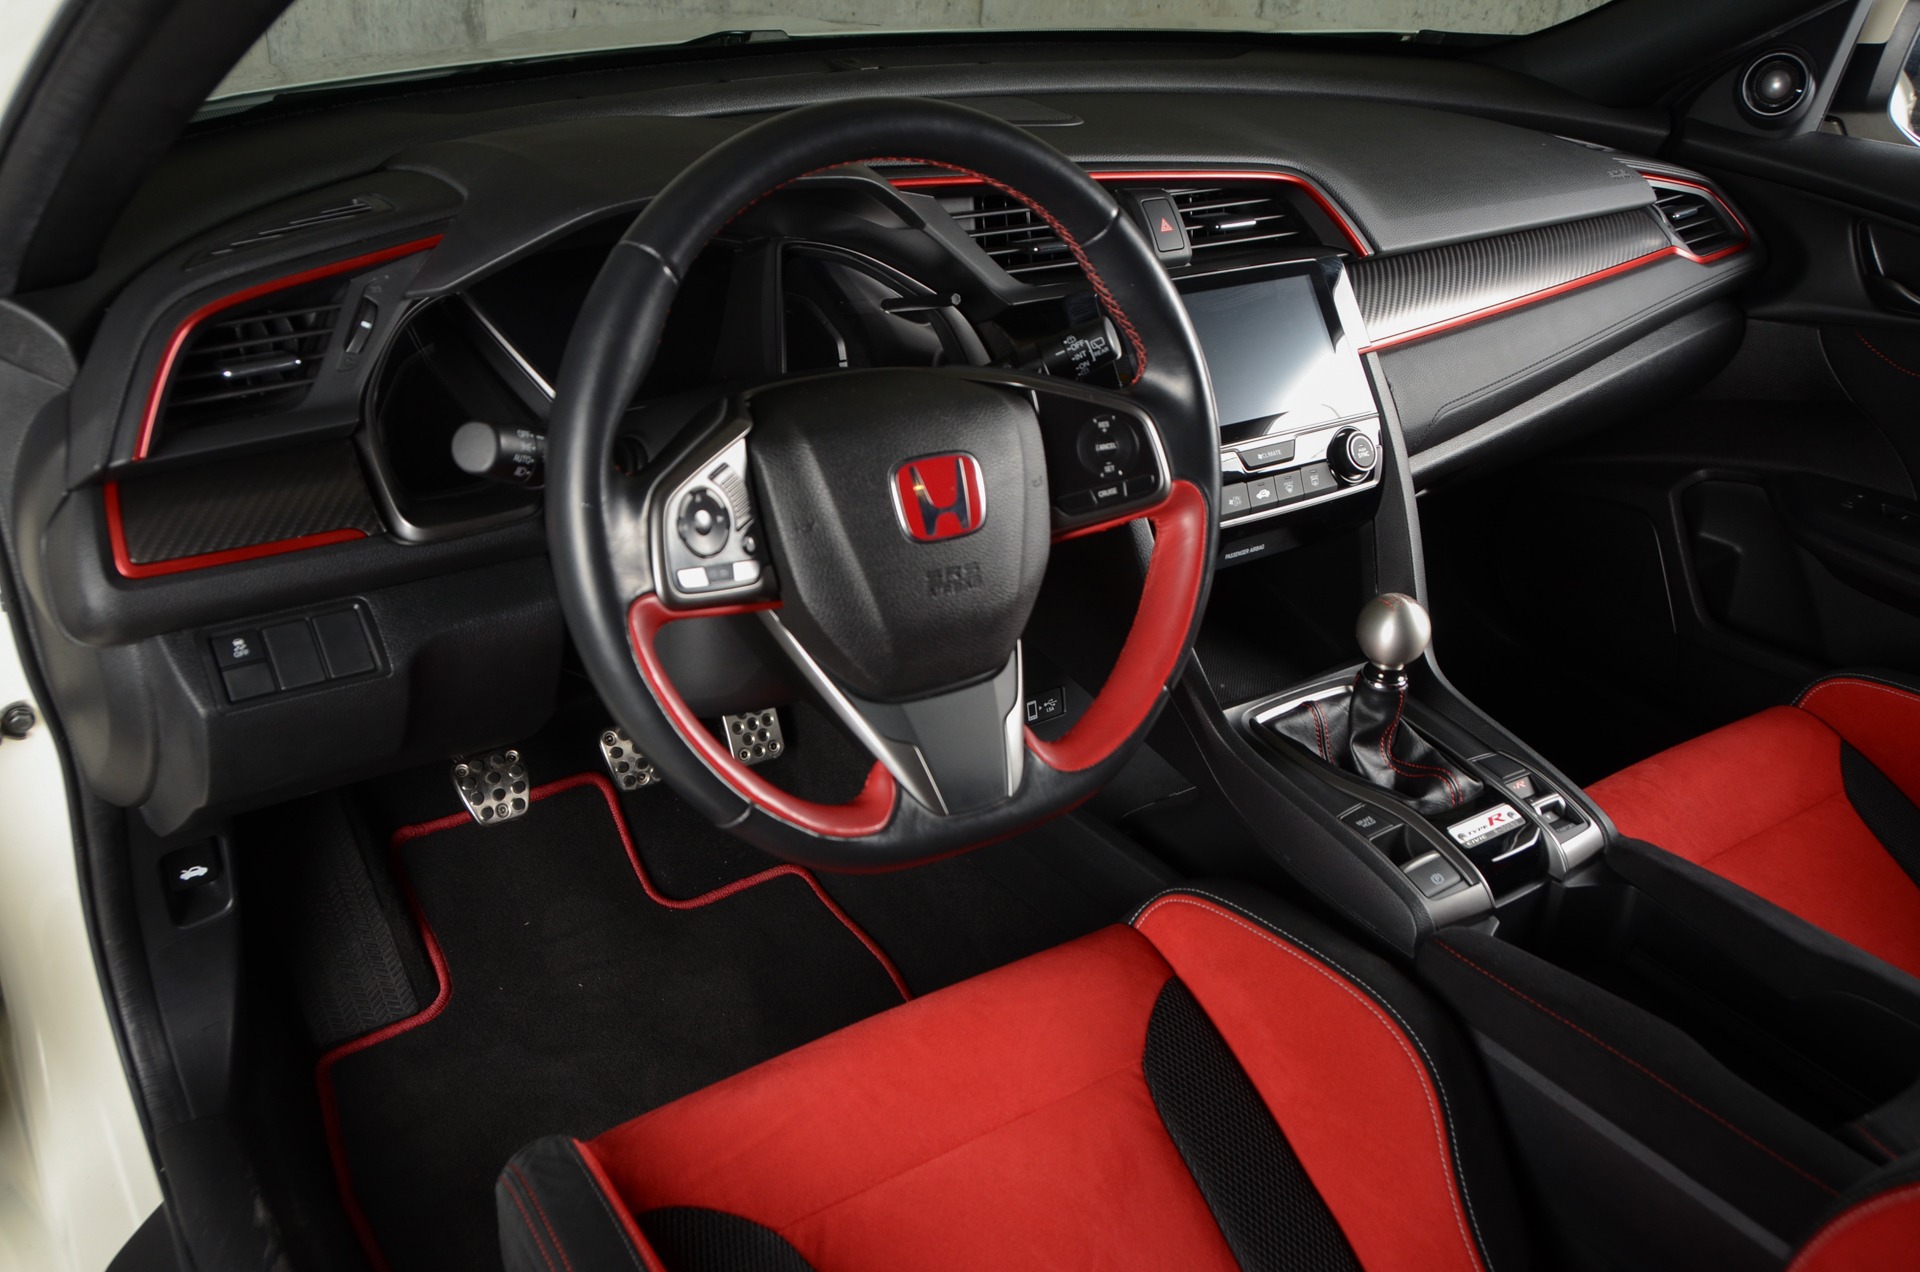 2017 Honda Civic Type R Touring For Sold Ryan Friedman Motor Cars Llc Stock 1734